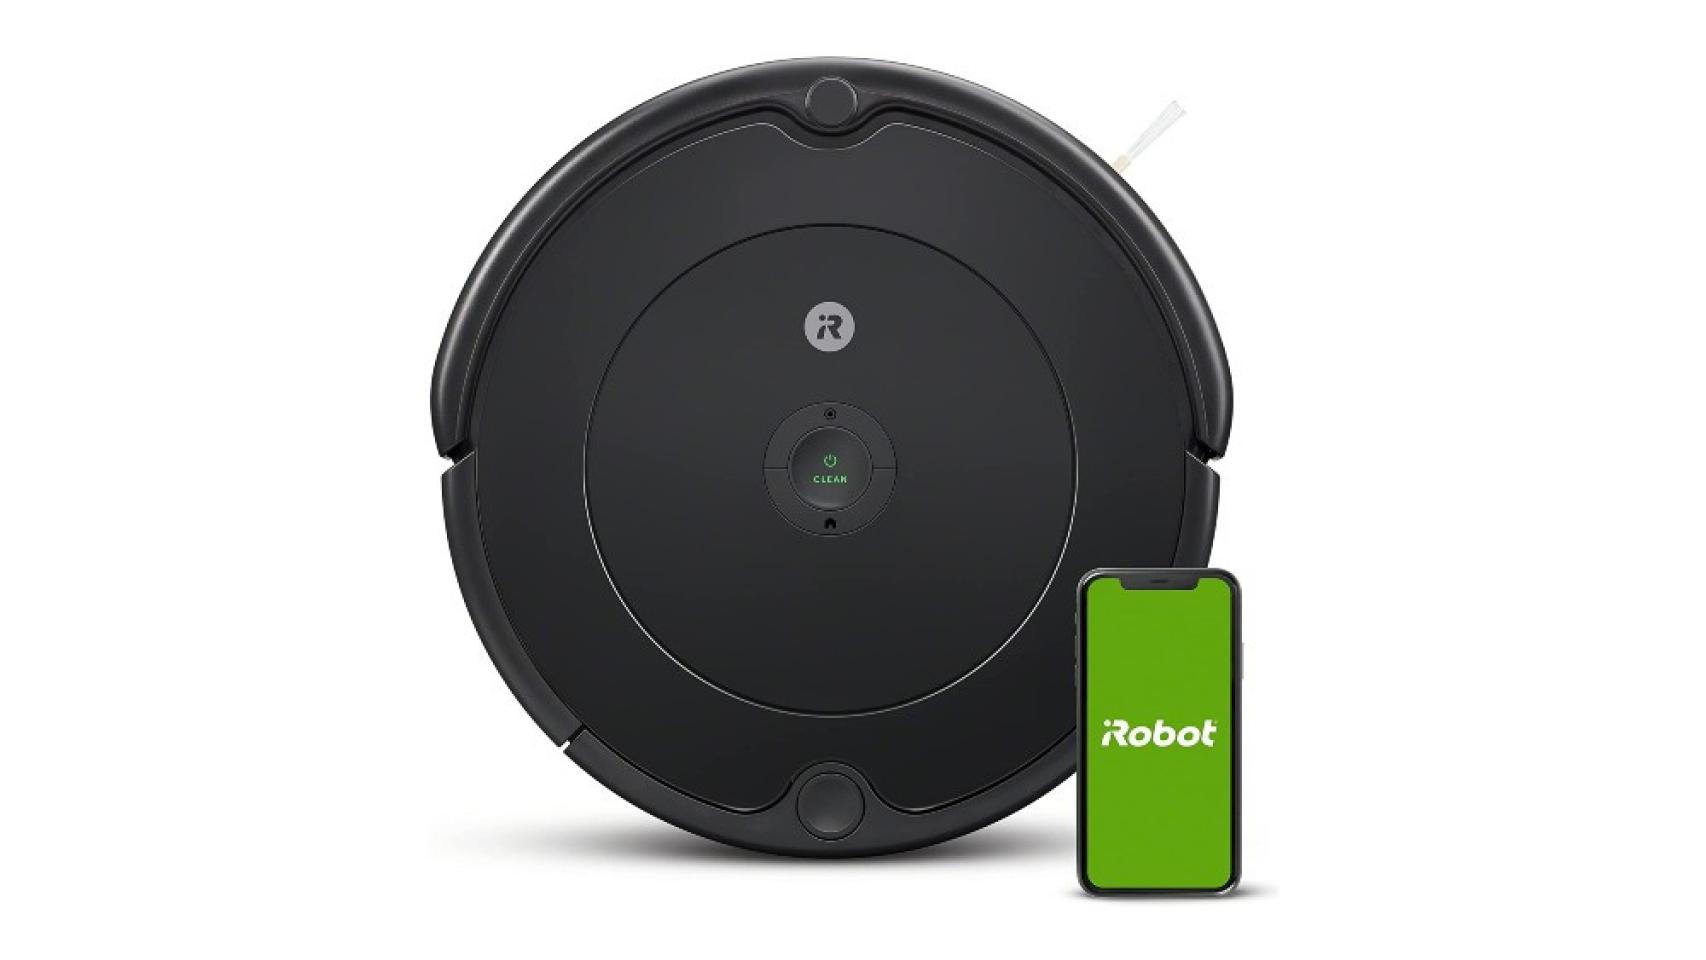 Robot aspirador iRobot Roomba 692